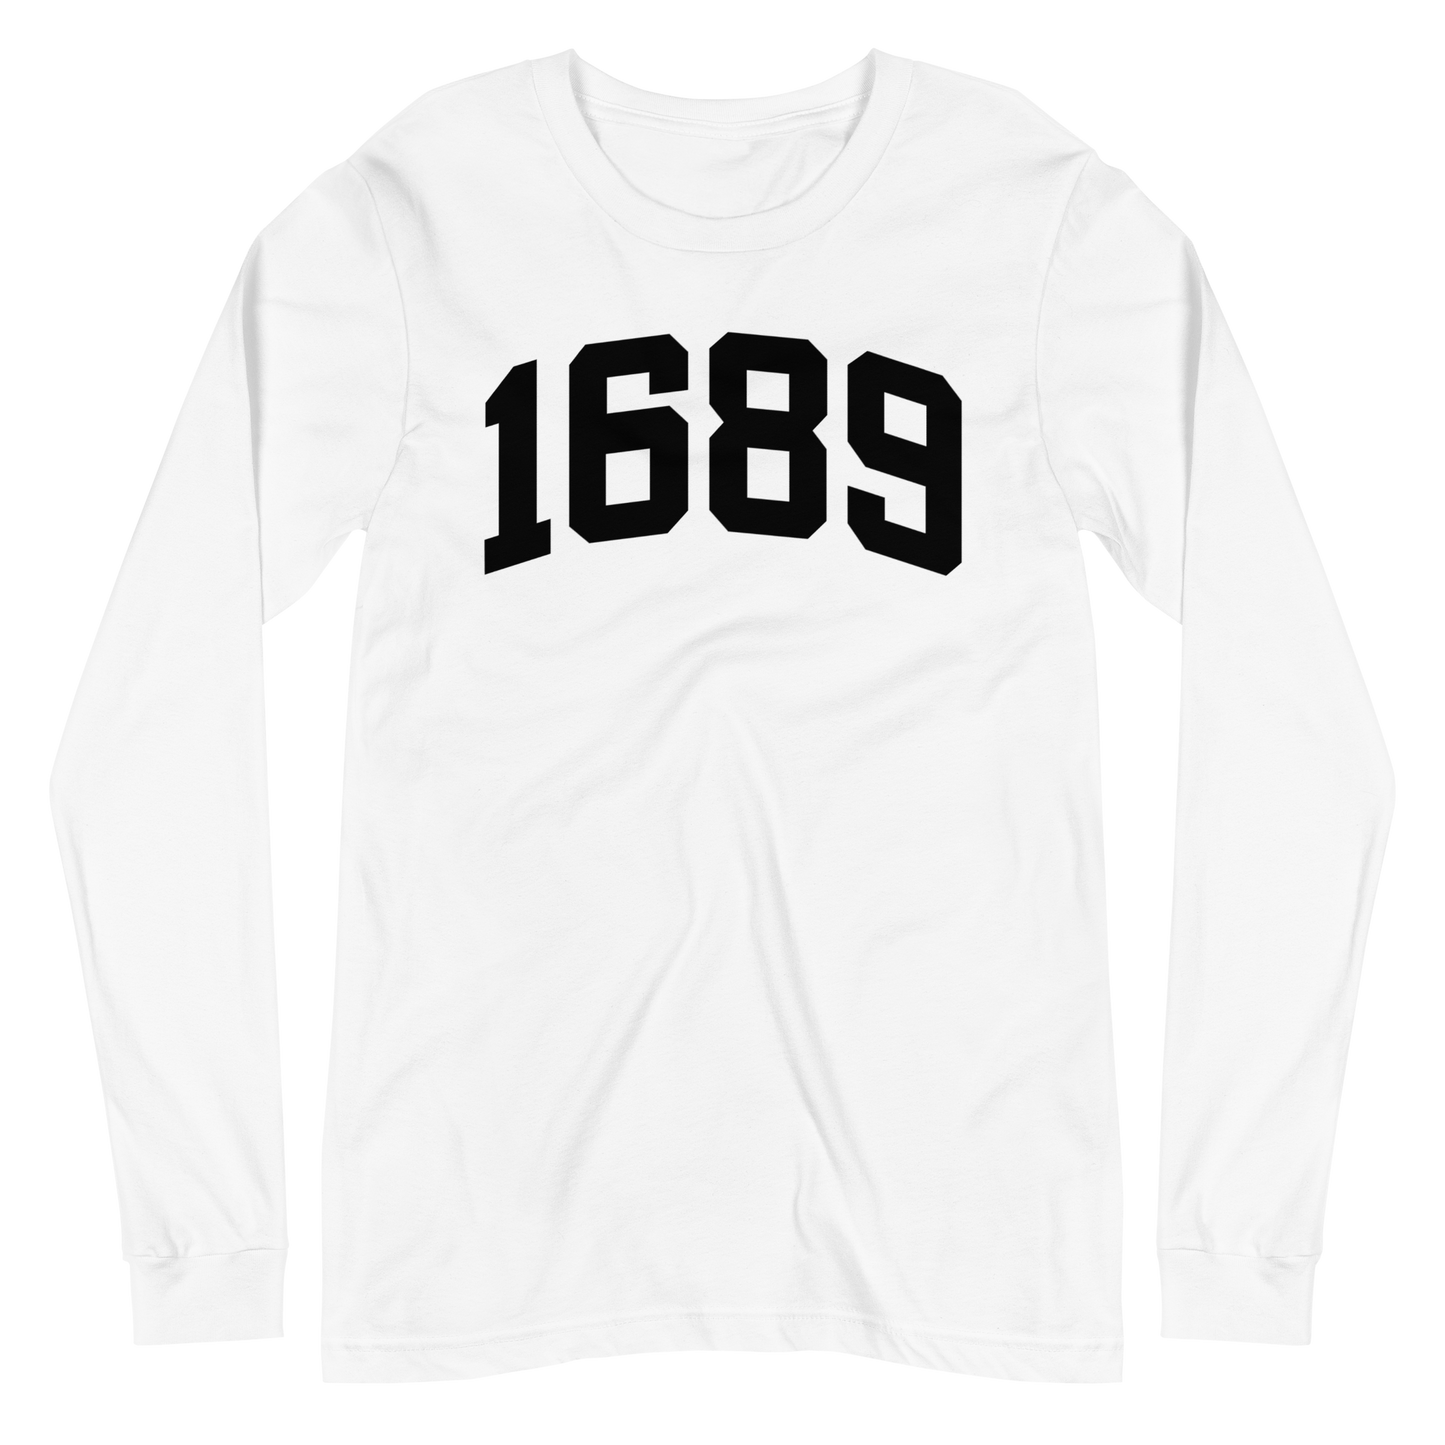 1689 Long Sleeve Shirt